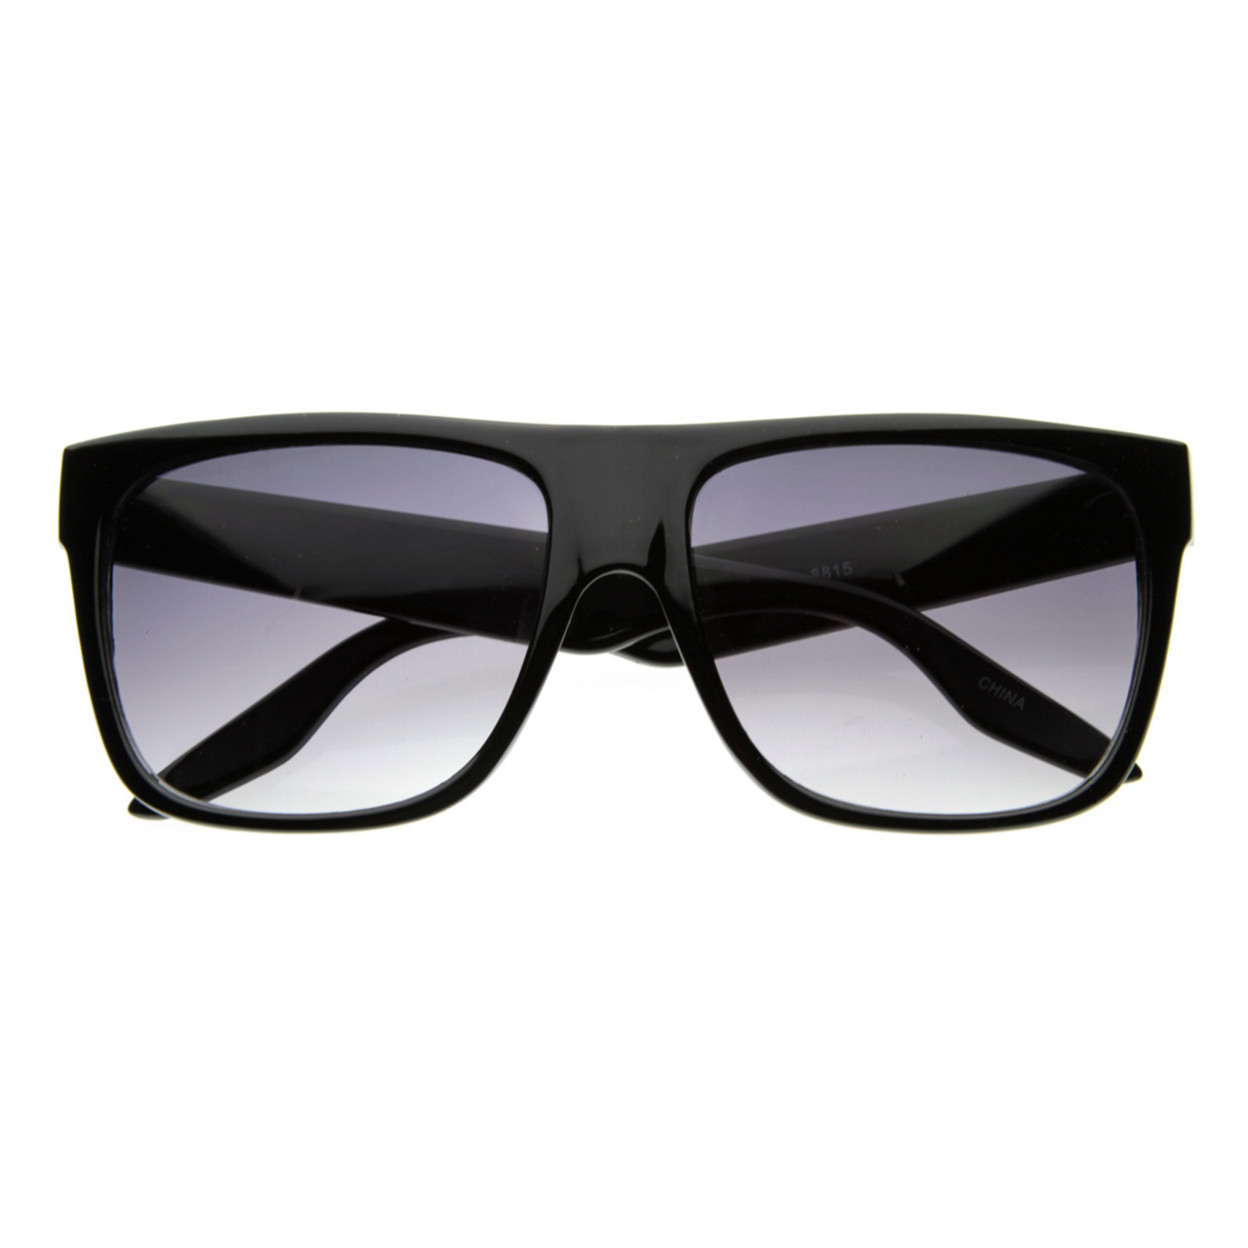 Casual Shades Menswear Plastic Flat Top Horned Rim Style Sunglasses Eyewear - 8256 - Tortoise